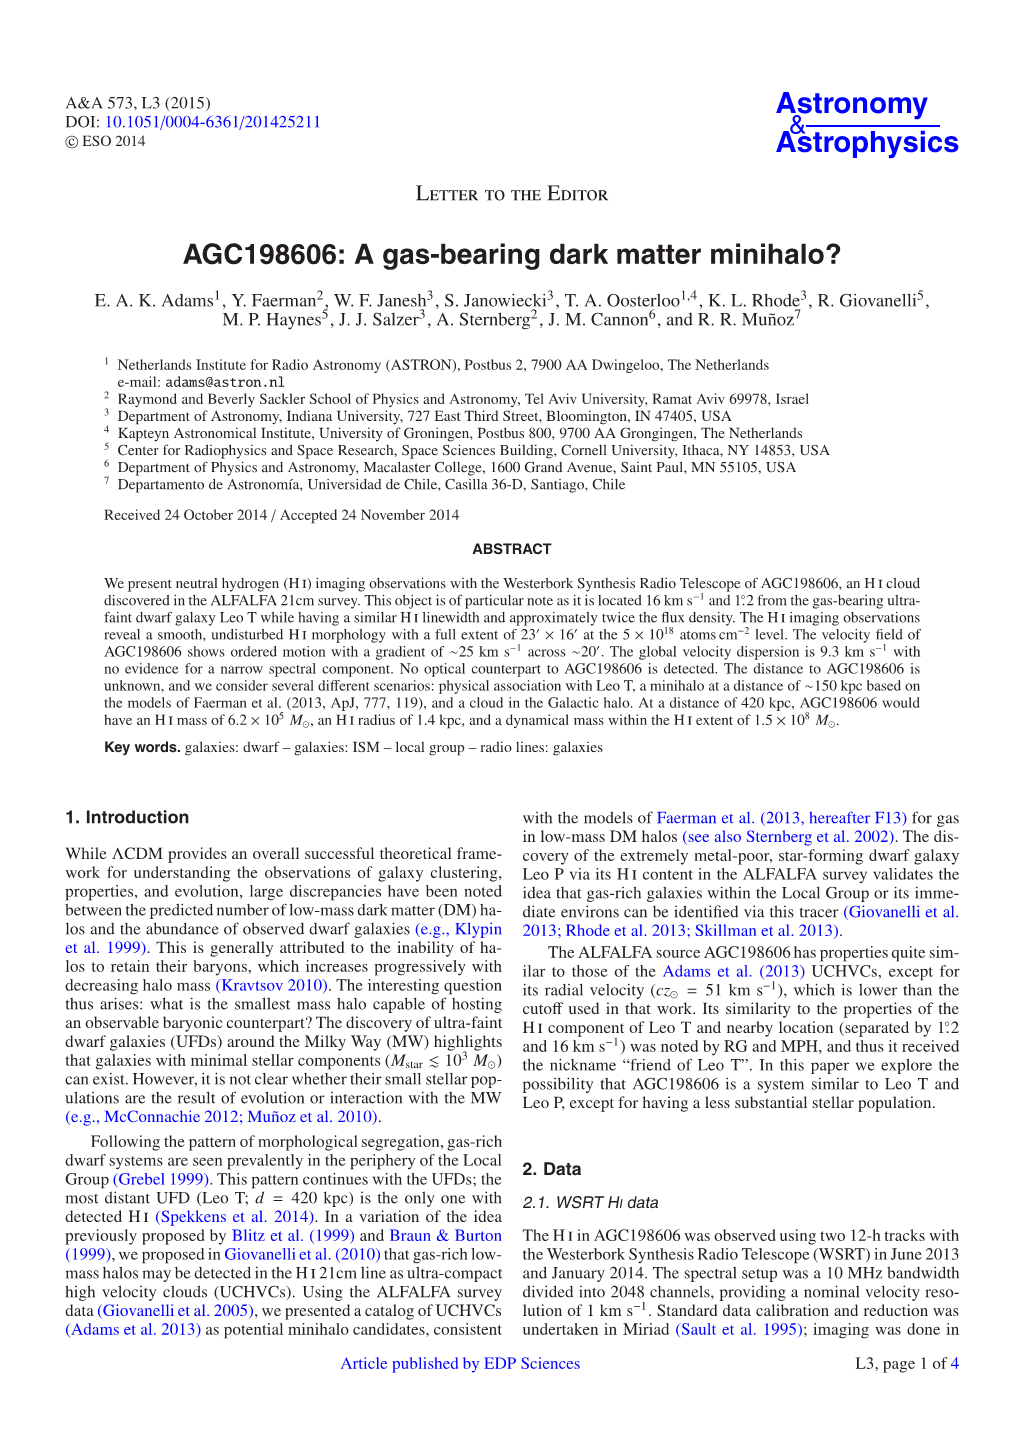 AGC198606: a Gas-Bearing Dark Matter Minihalo?